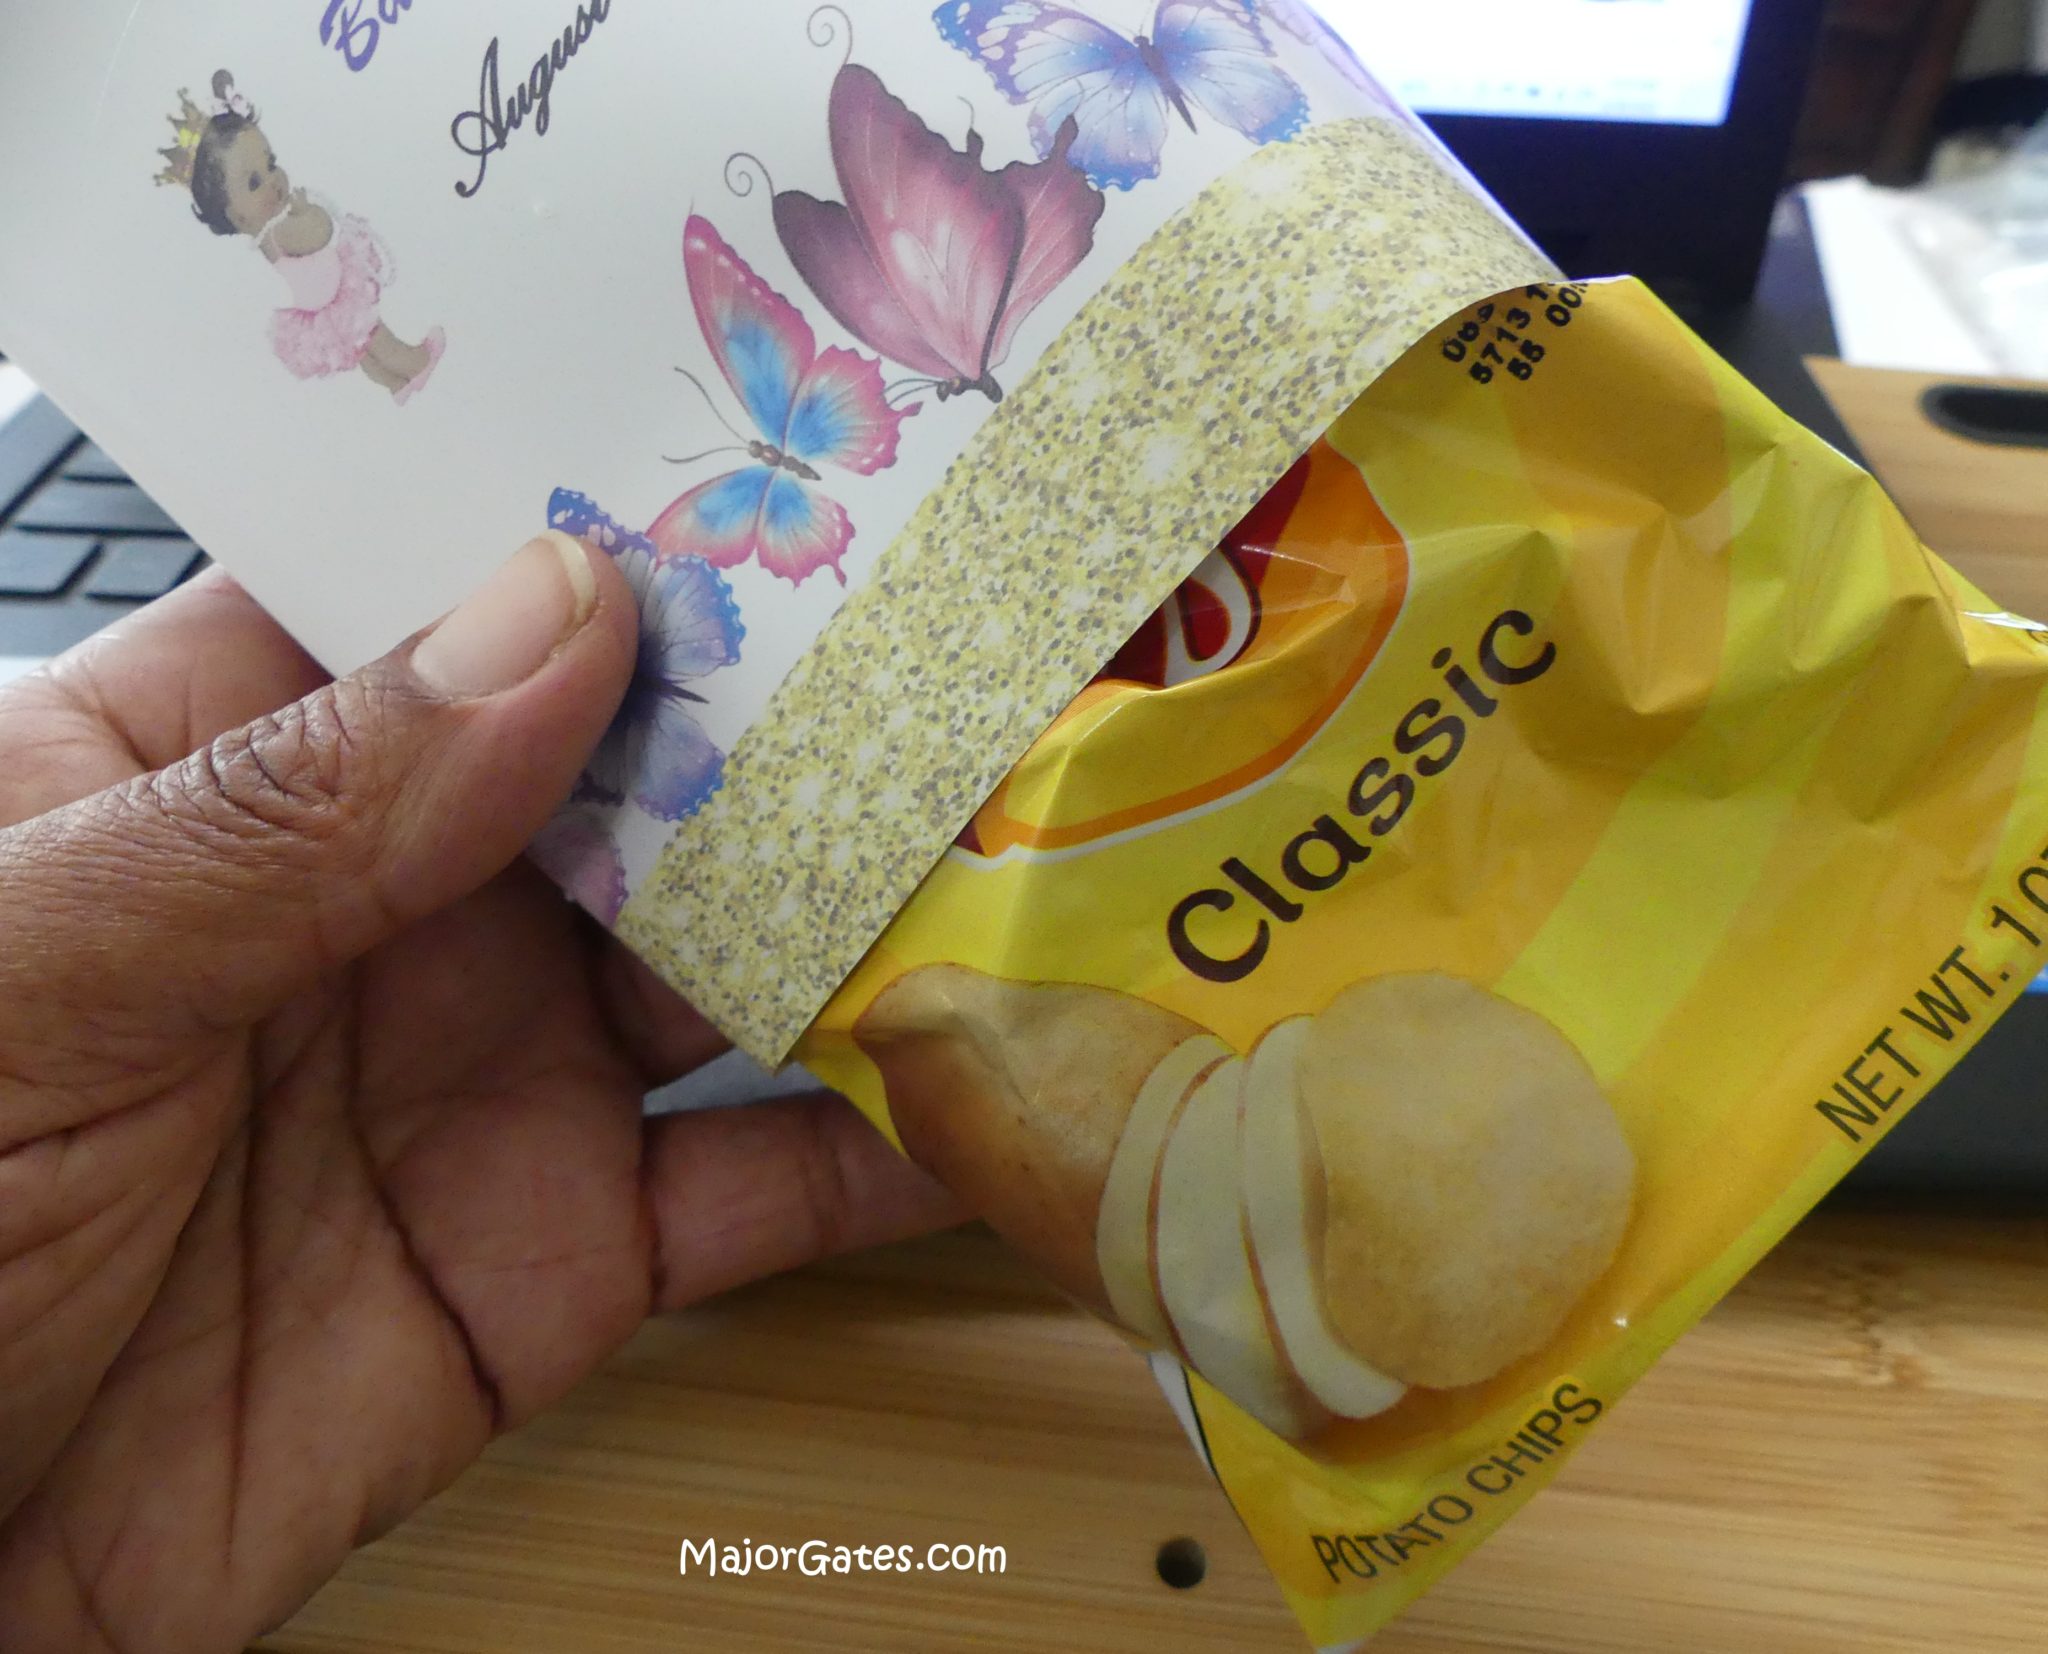 The Potato Chip Bag and Other Snack BagsTrash Backwards Blog